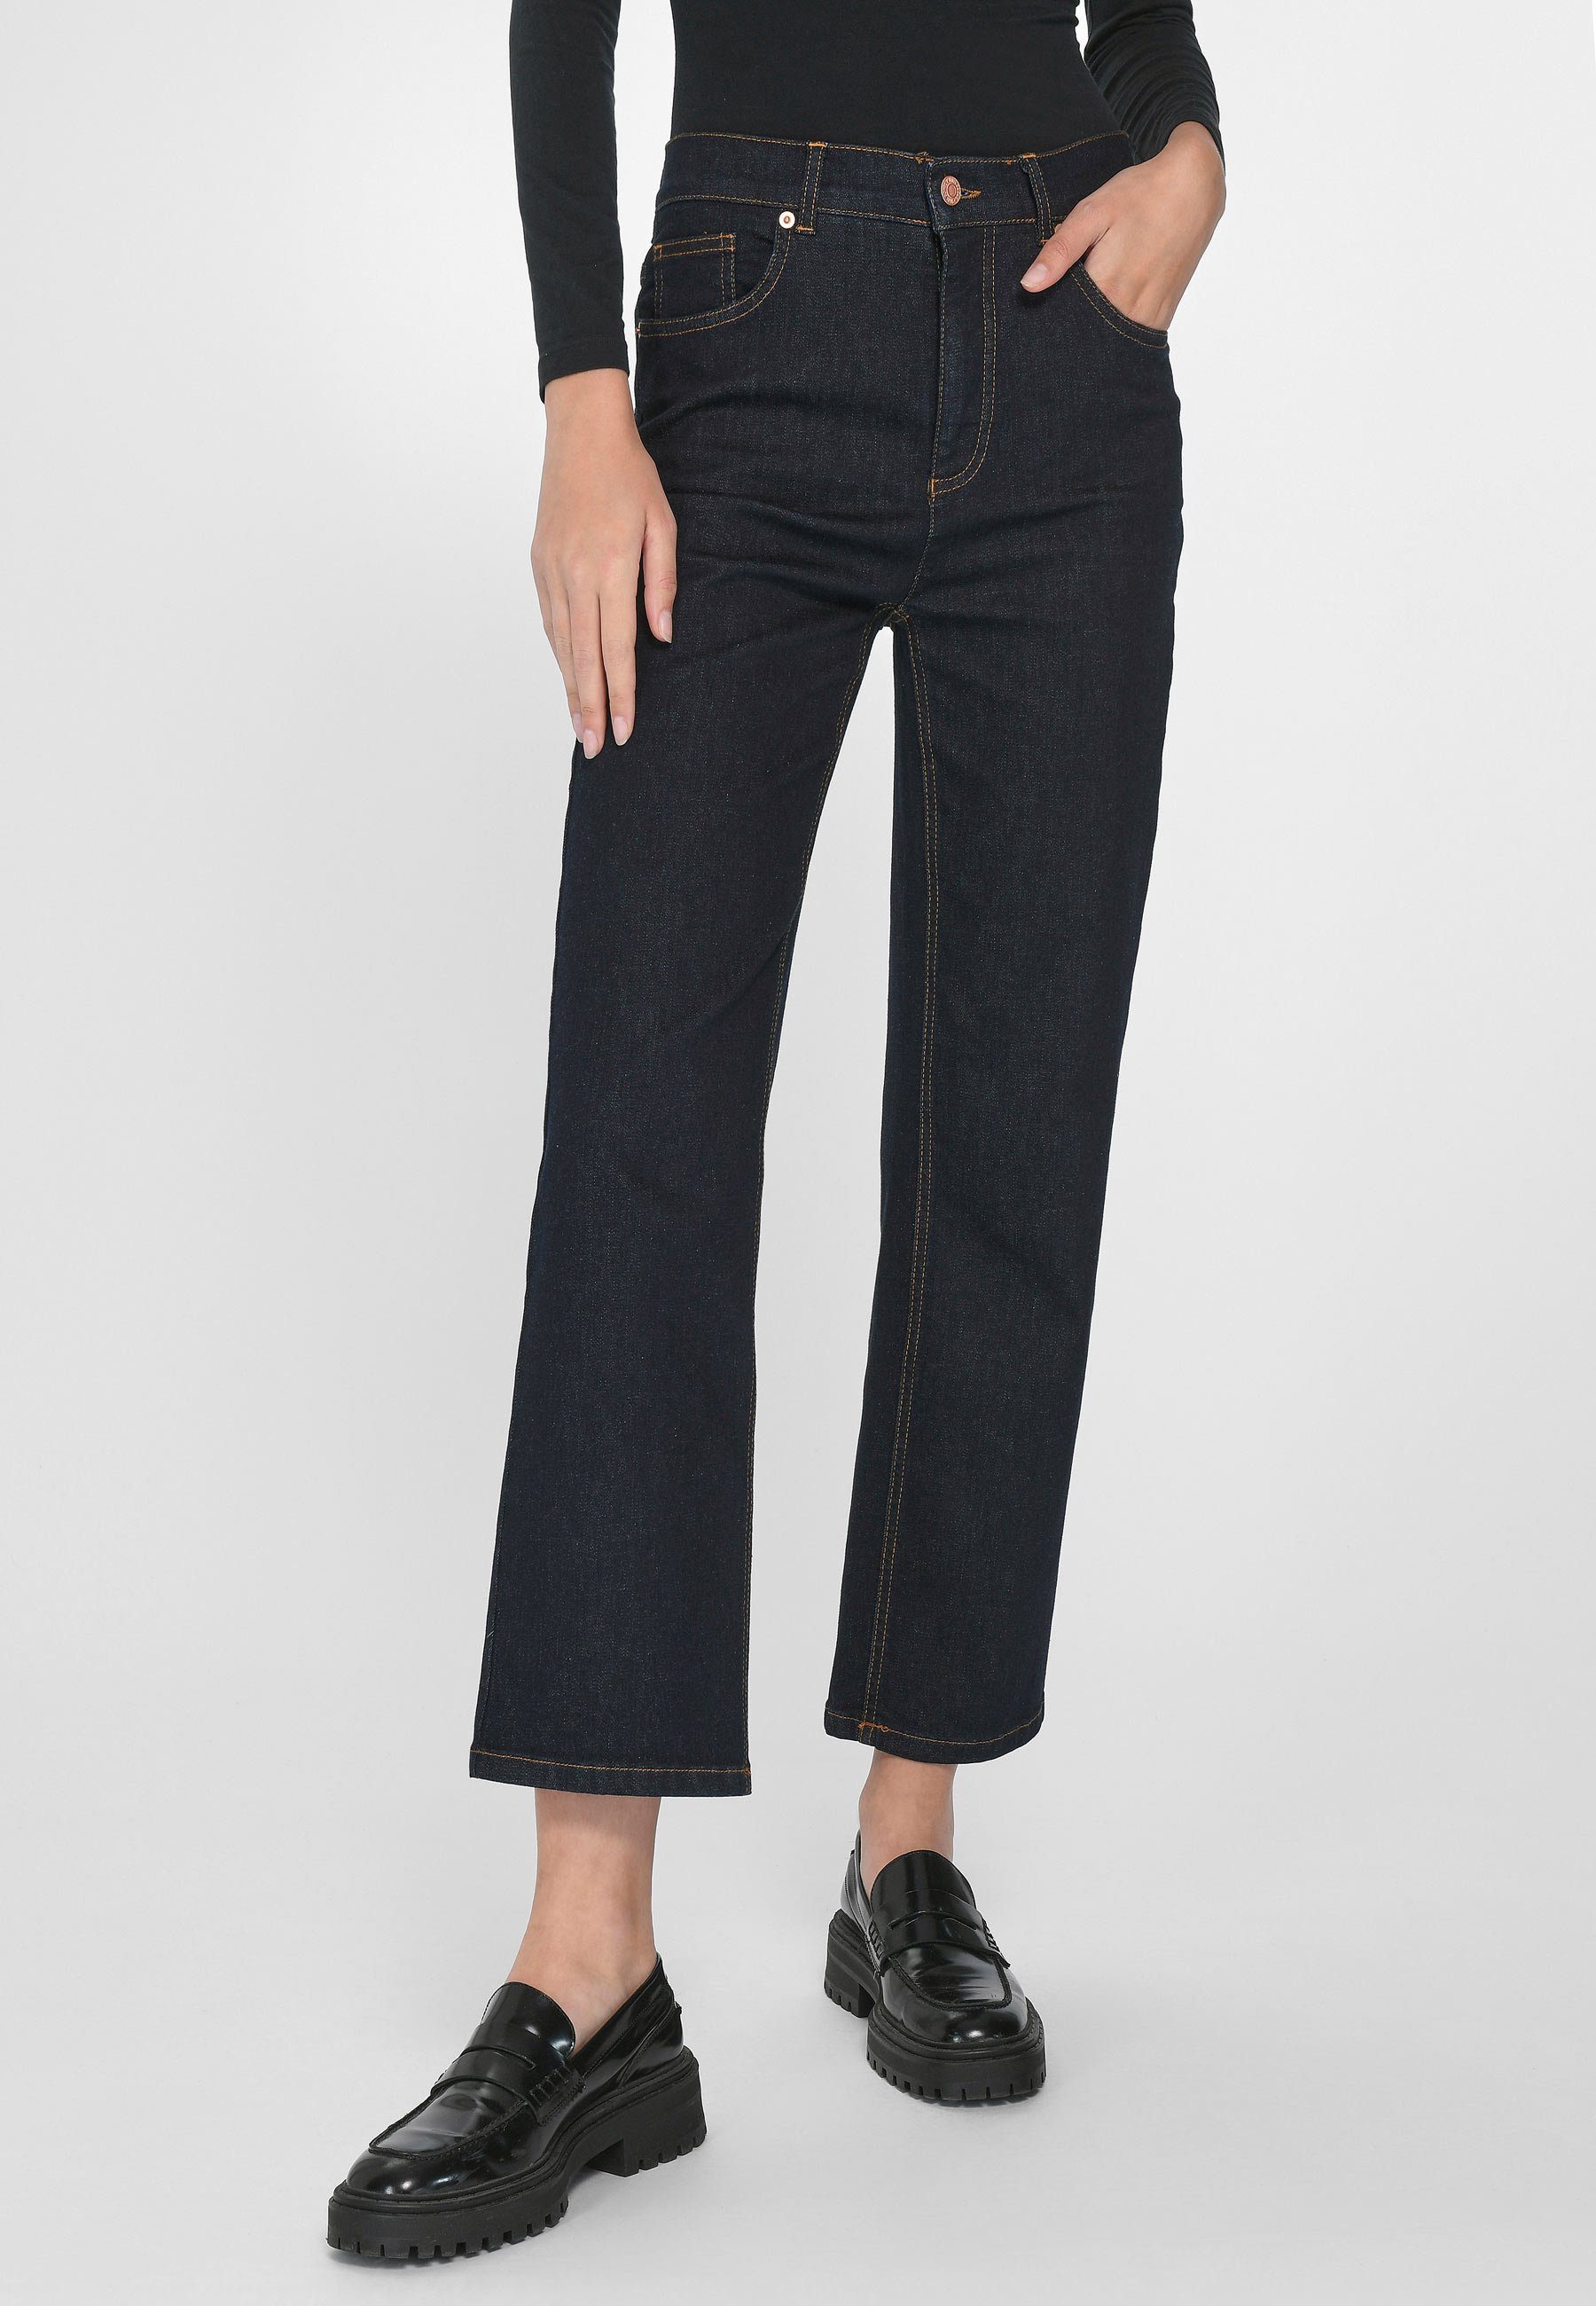 London 5-Pocket-Jeans dunkelblau Design mit modernem Cotton WALL